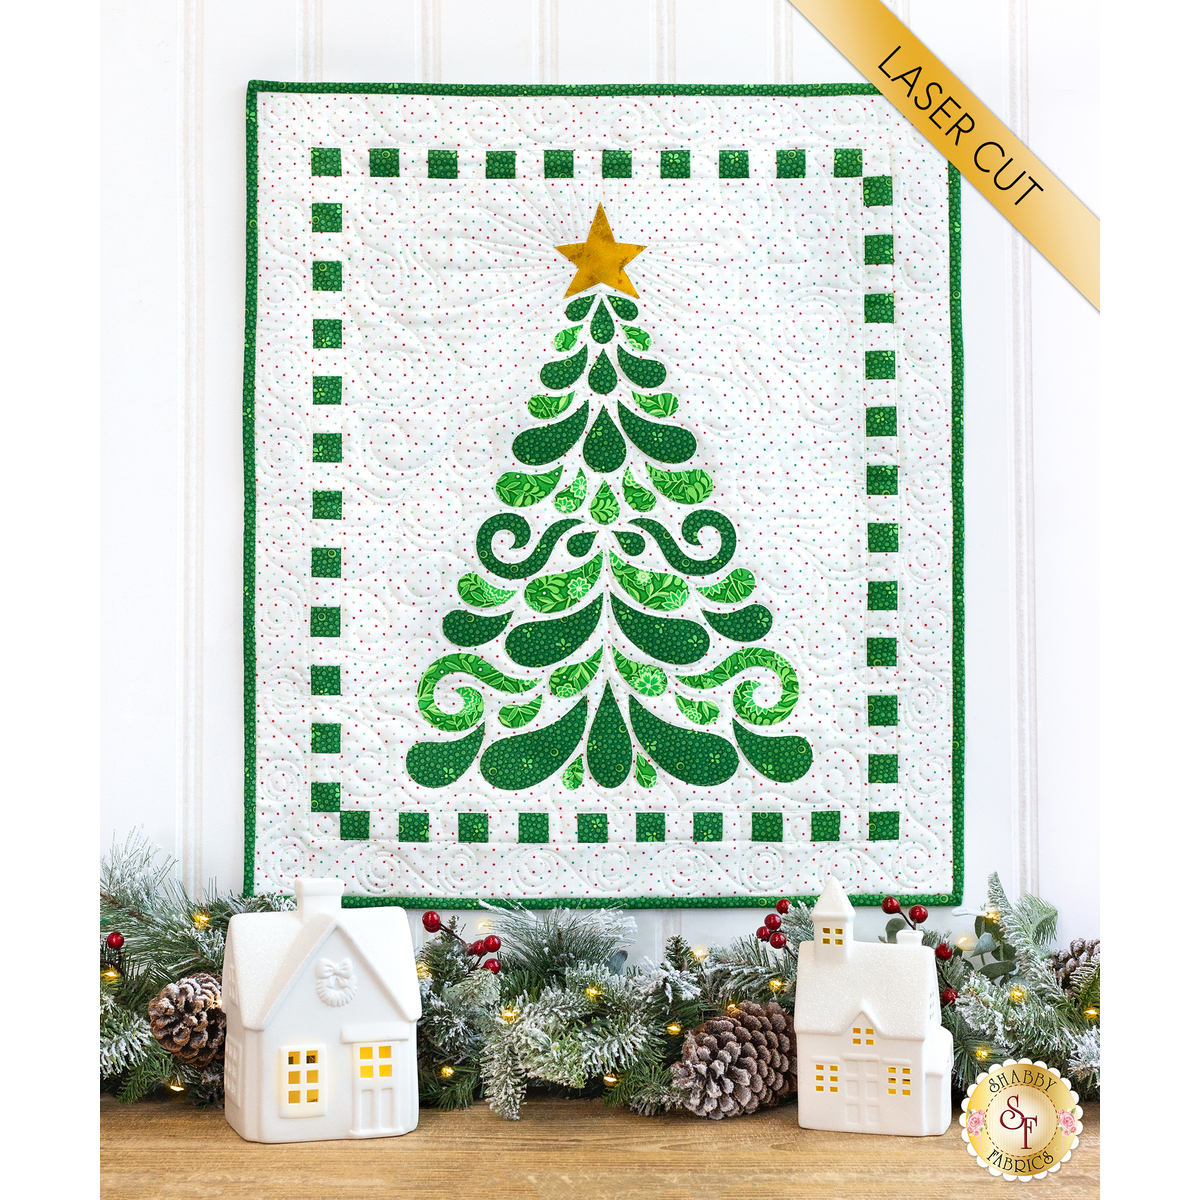 Felt Christmas Ornament Patterns - 10 Piece Bundle - The Yellow Birdhouse